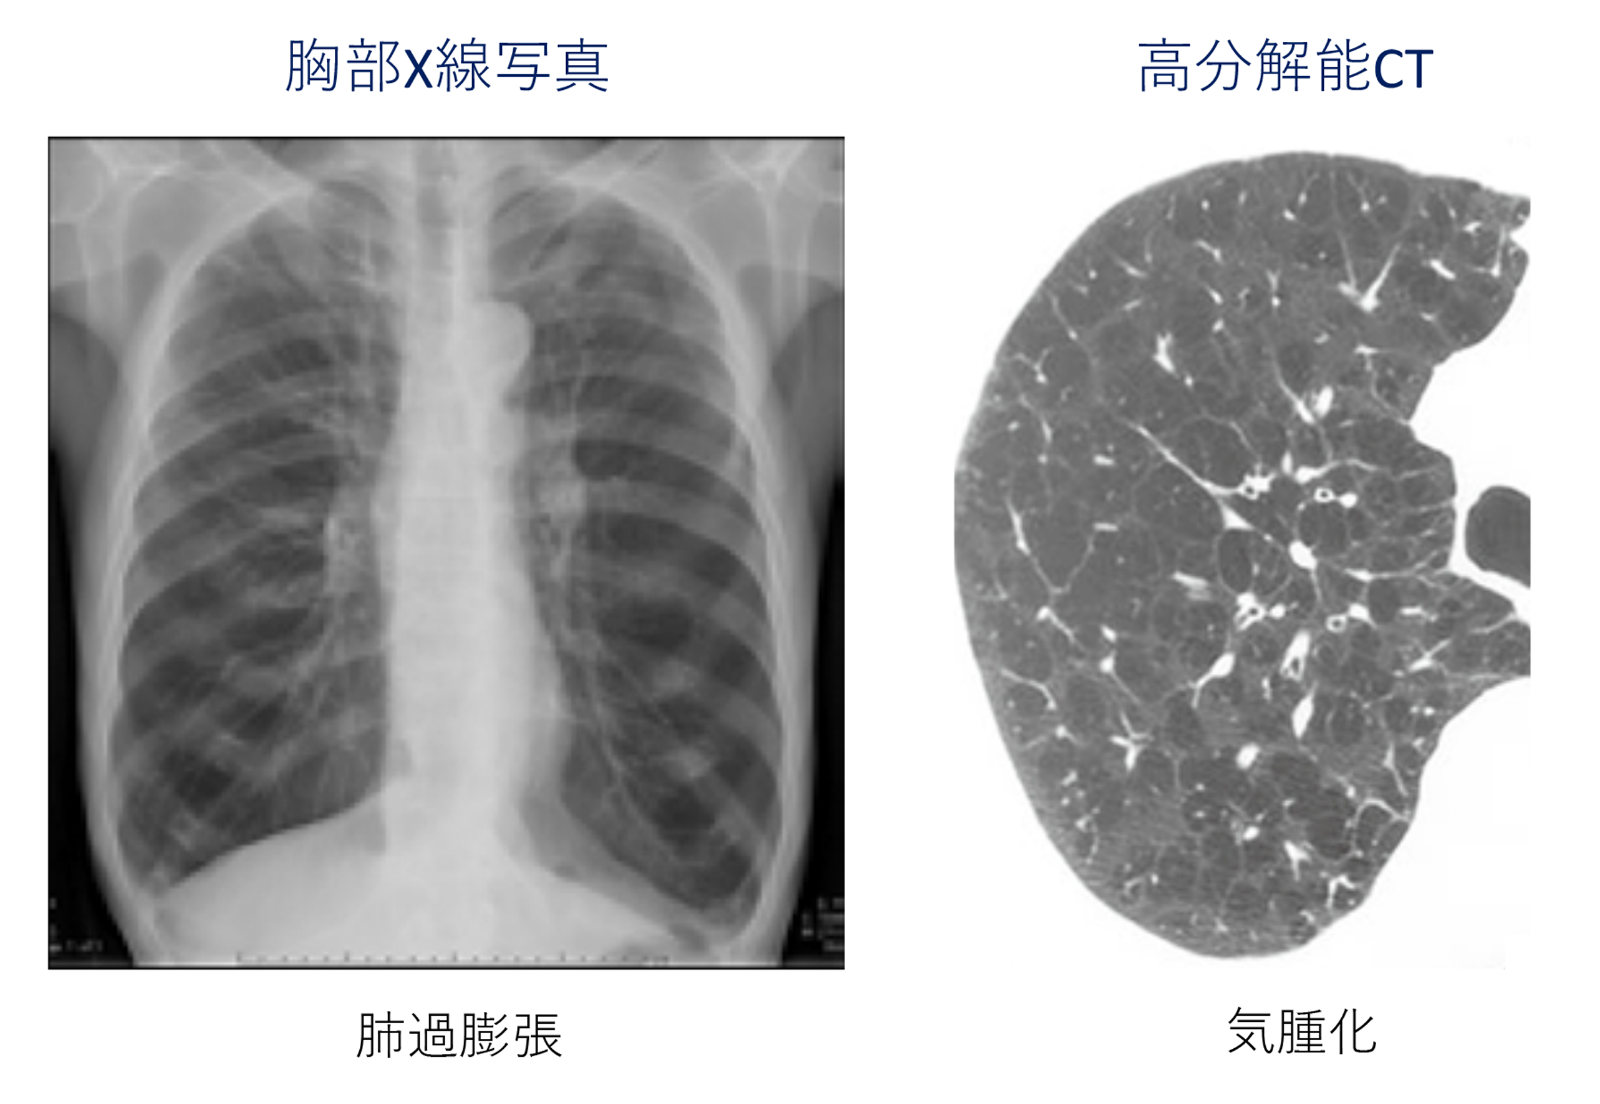 COPDの胸部X線画像と高分解能CT画像